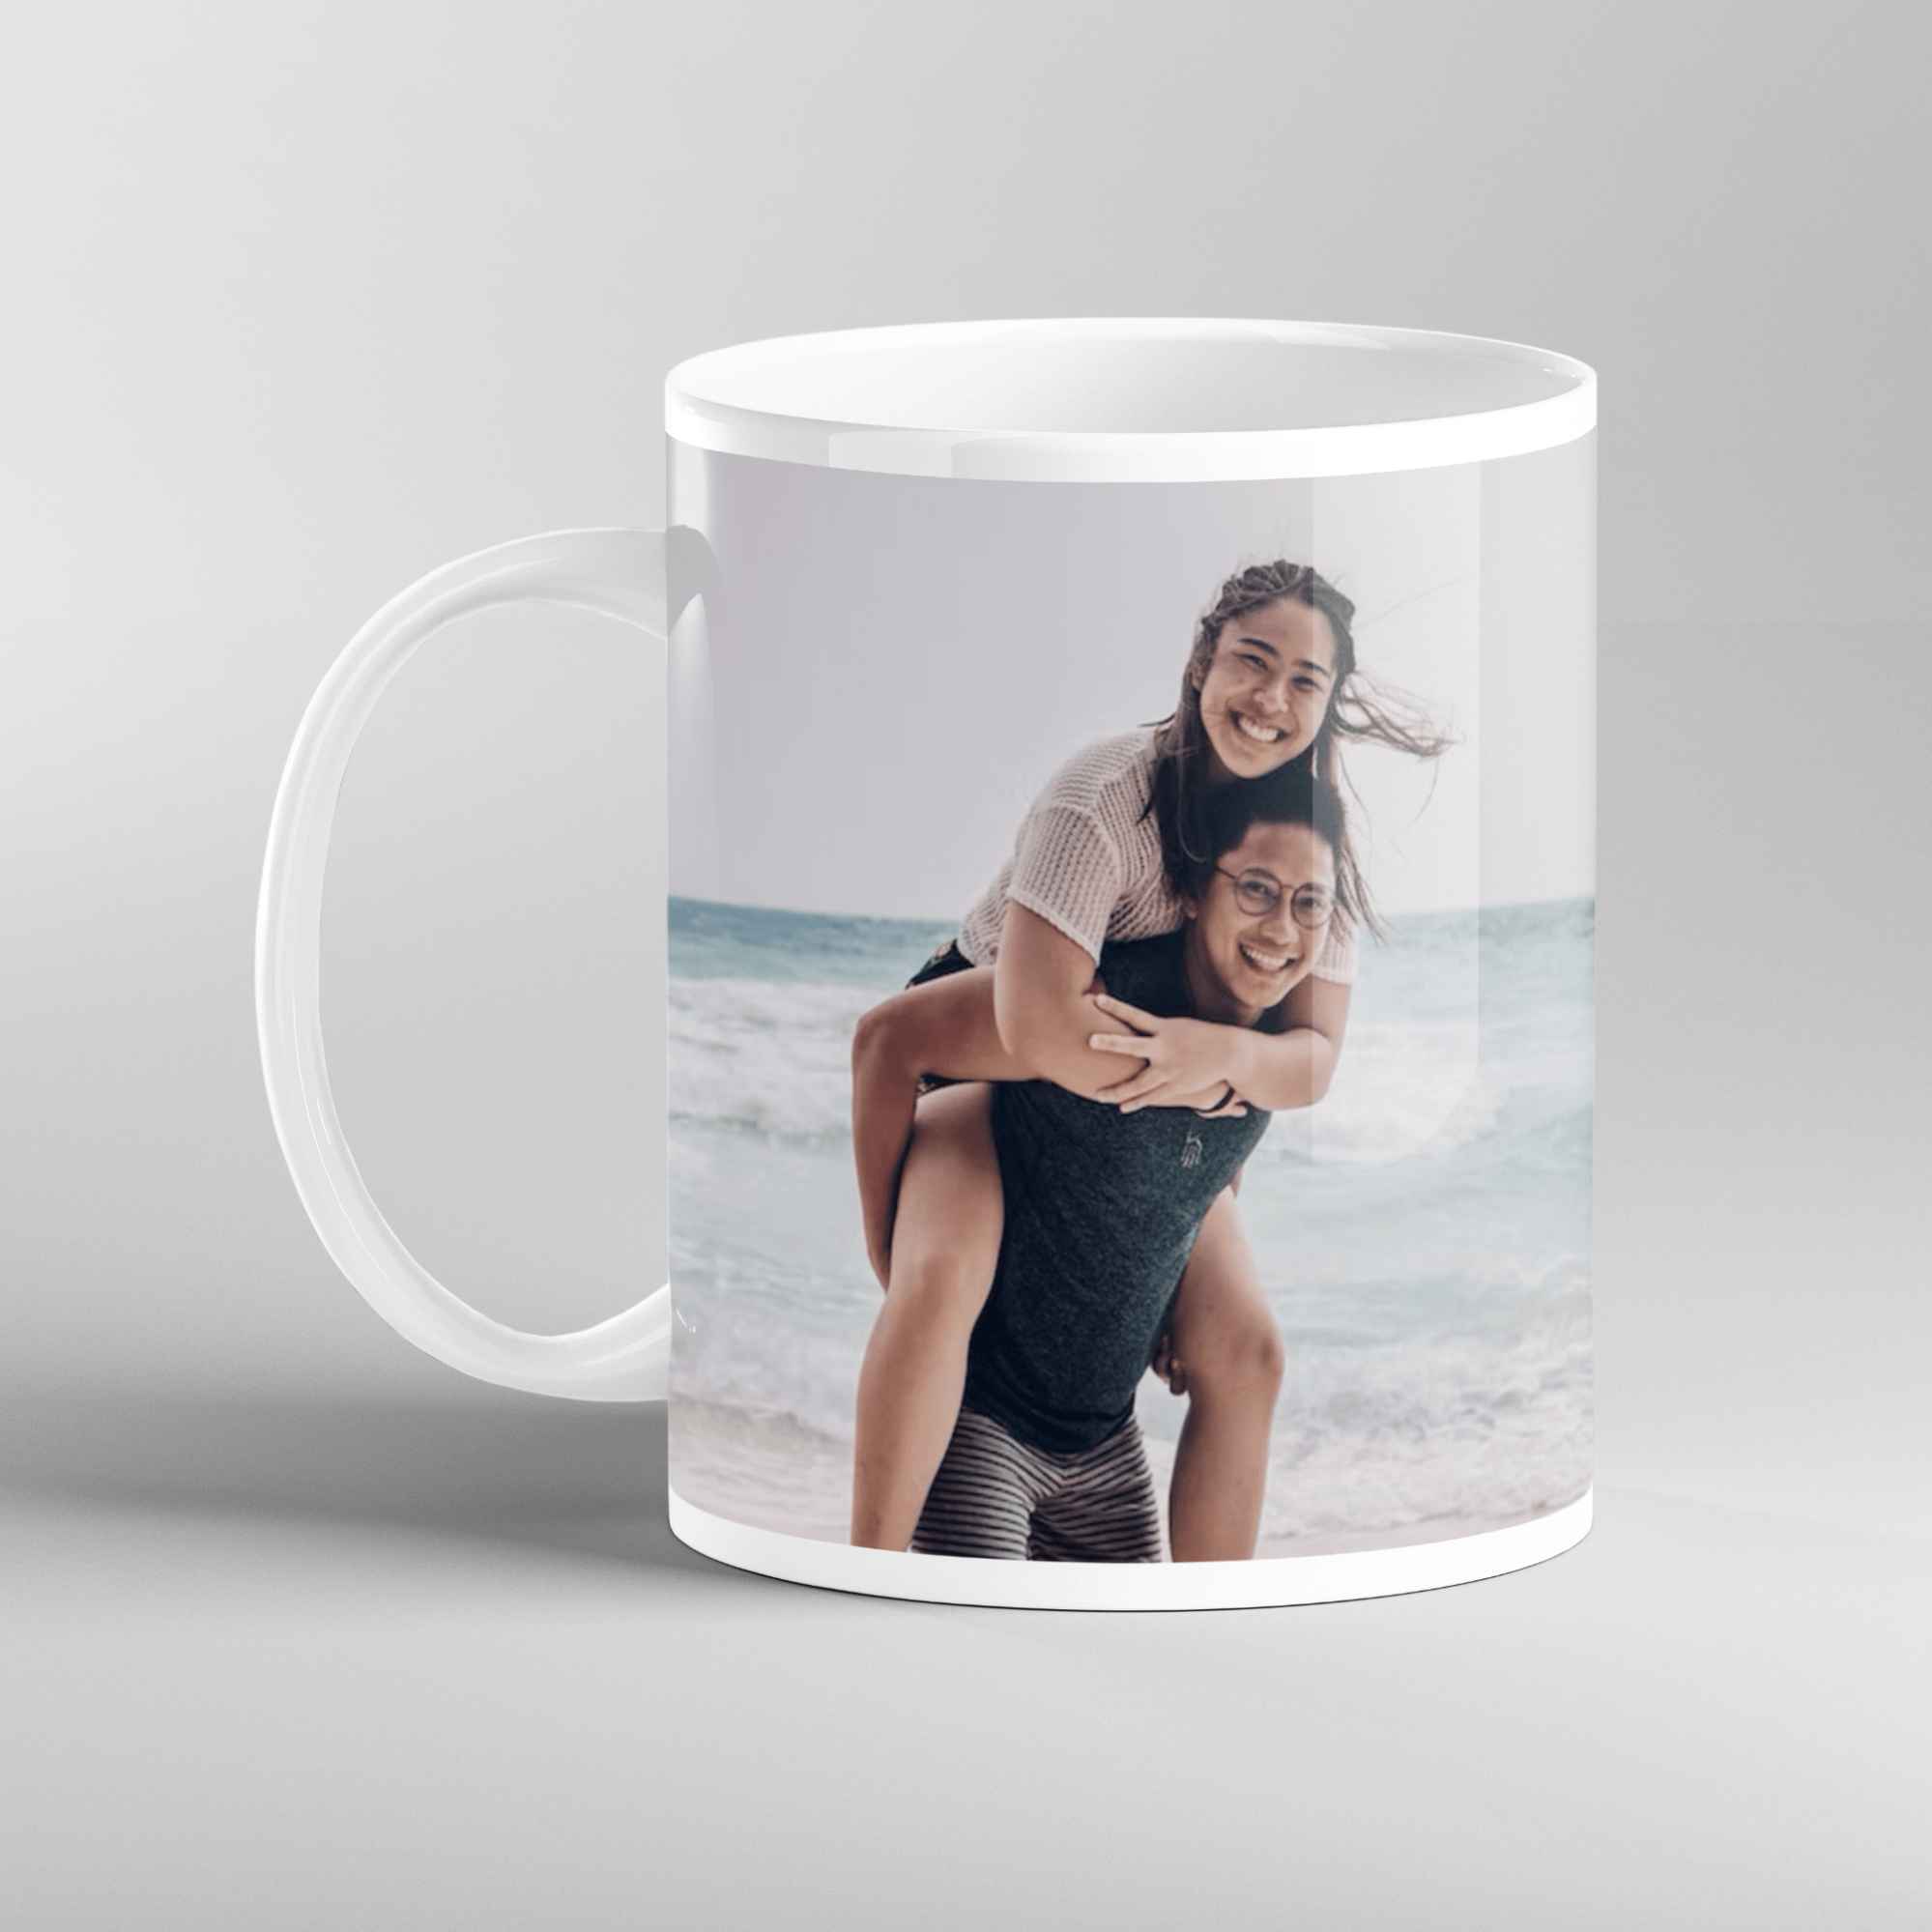 Personalized Mug: Considerate Wedding Gift in Singapore.